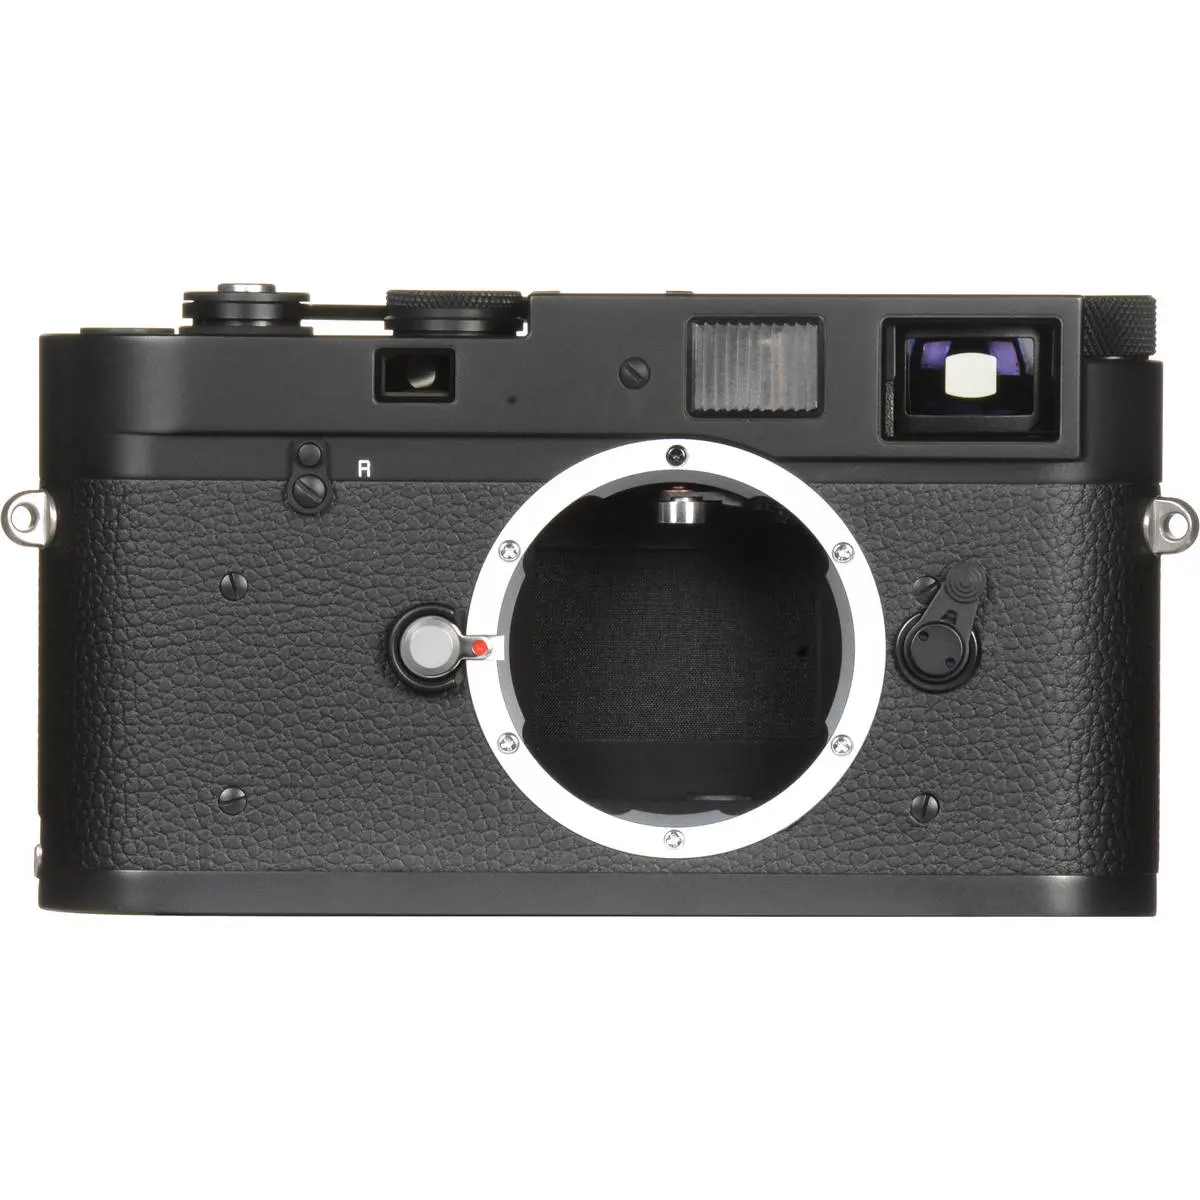 Main Image Leica M-A (Typ 127) Black Chrome Finish